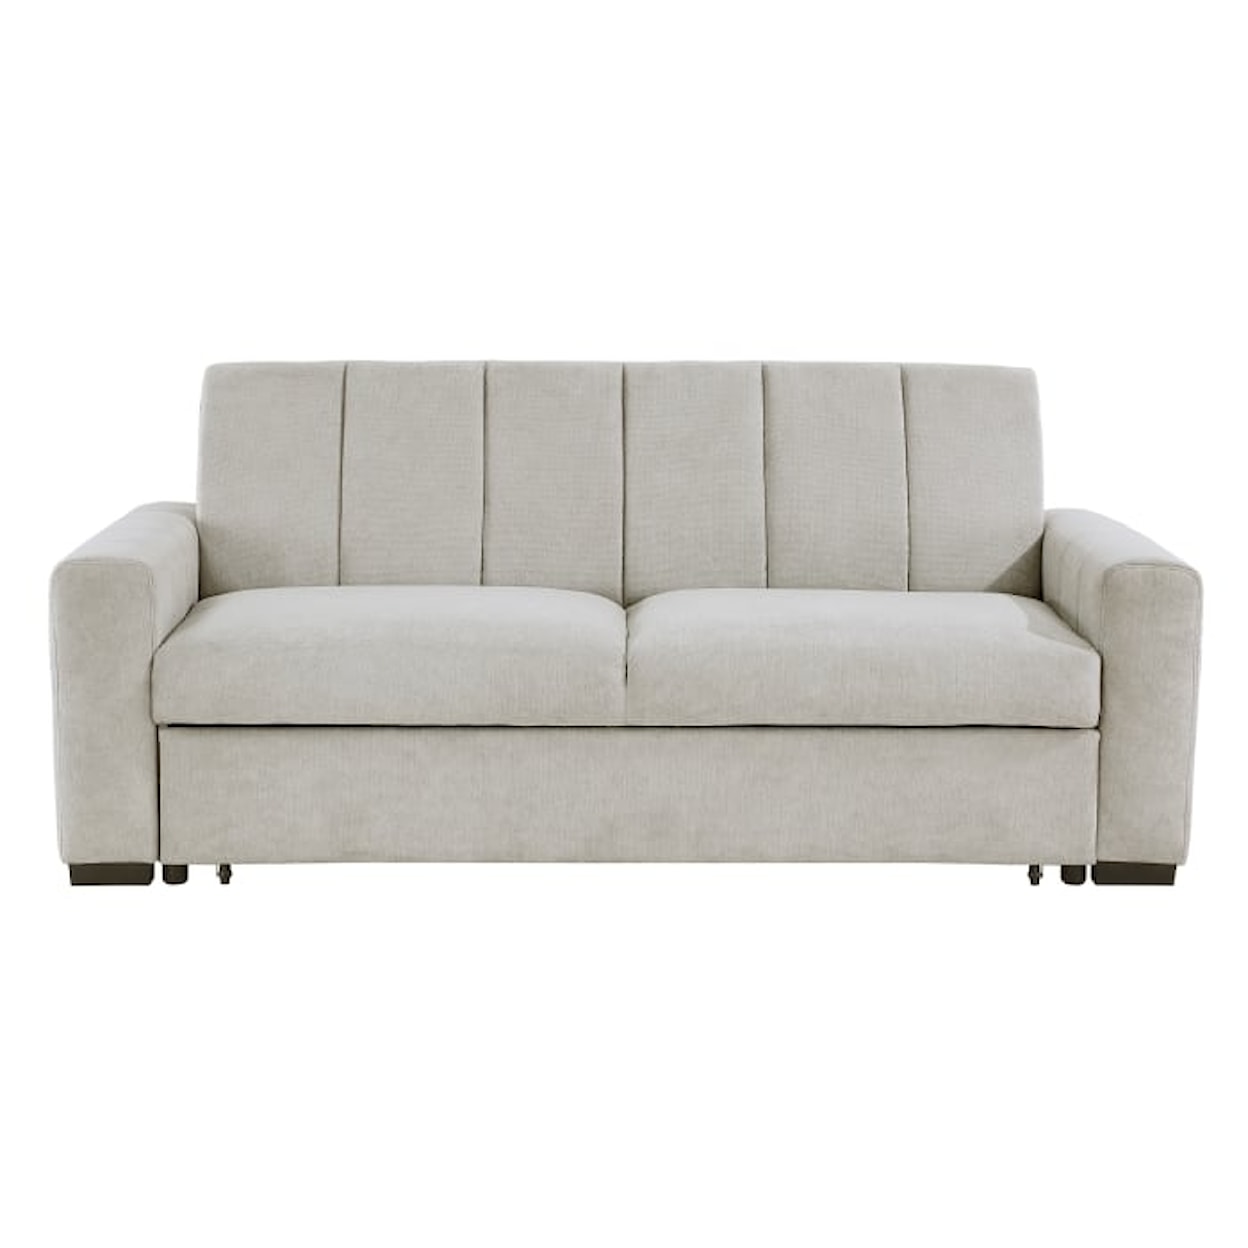 Homelegance Miscellaneous Sofa